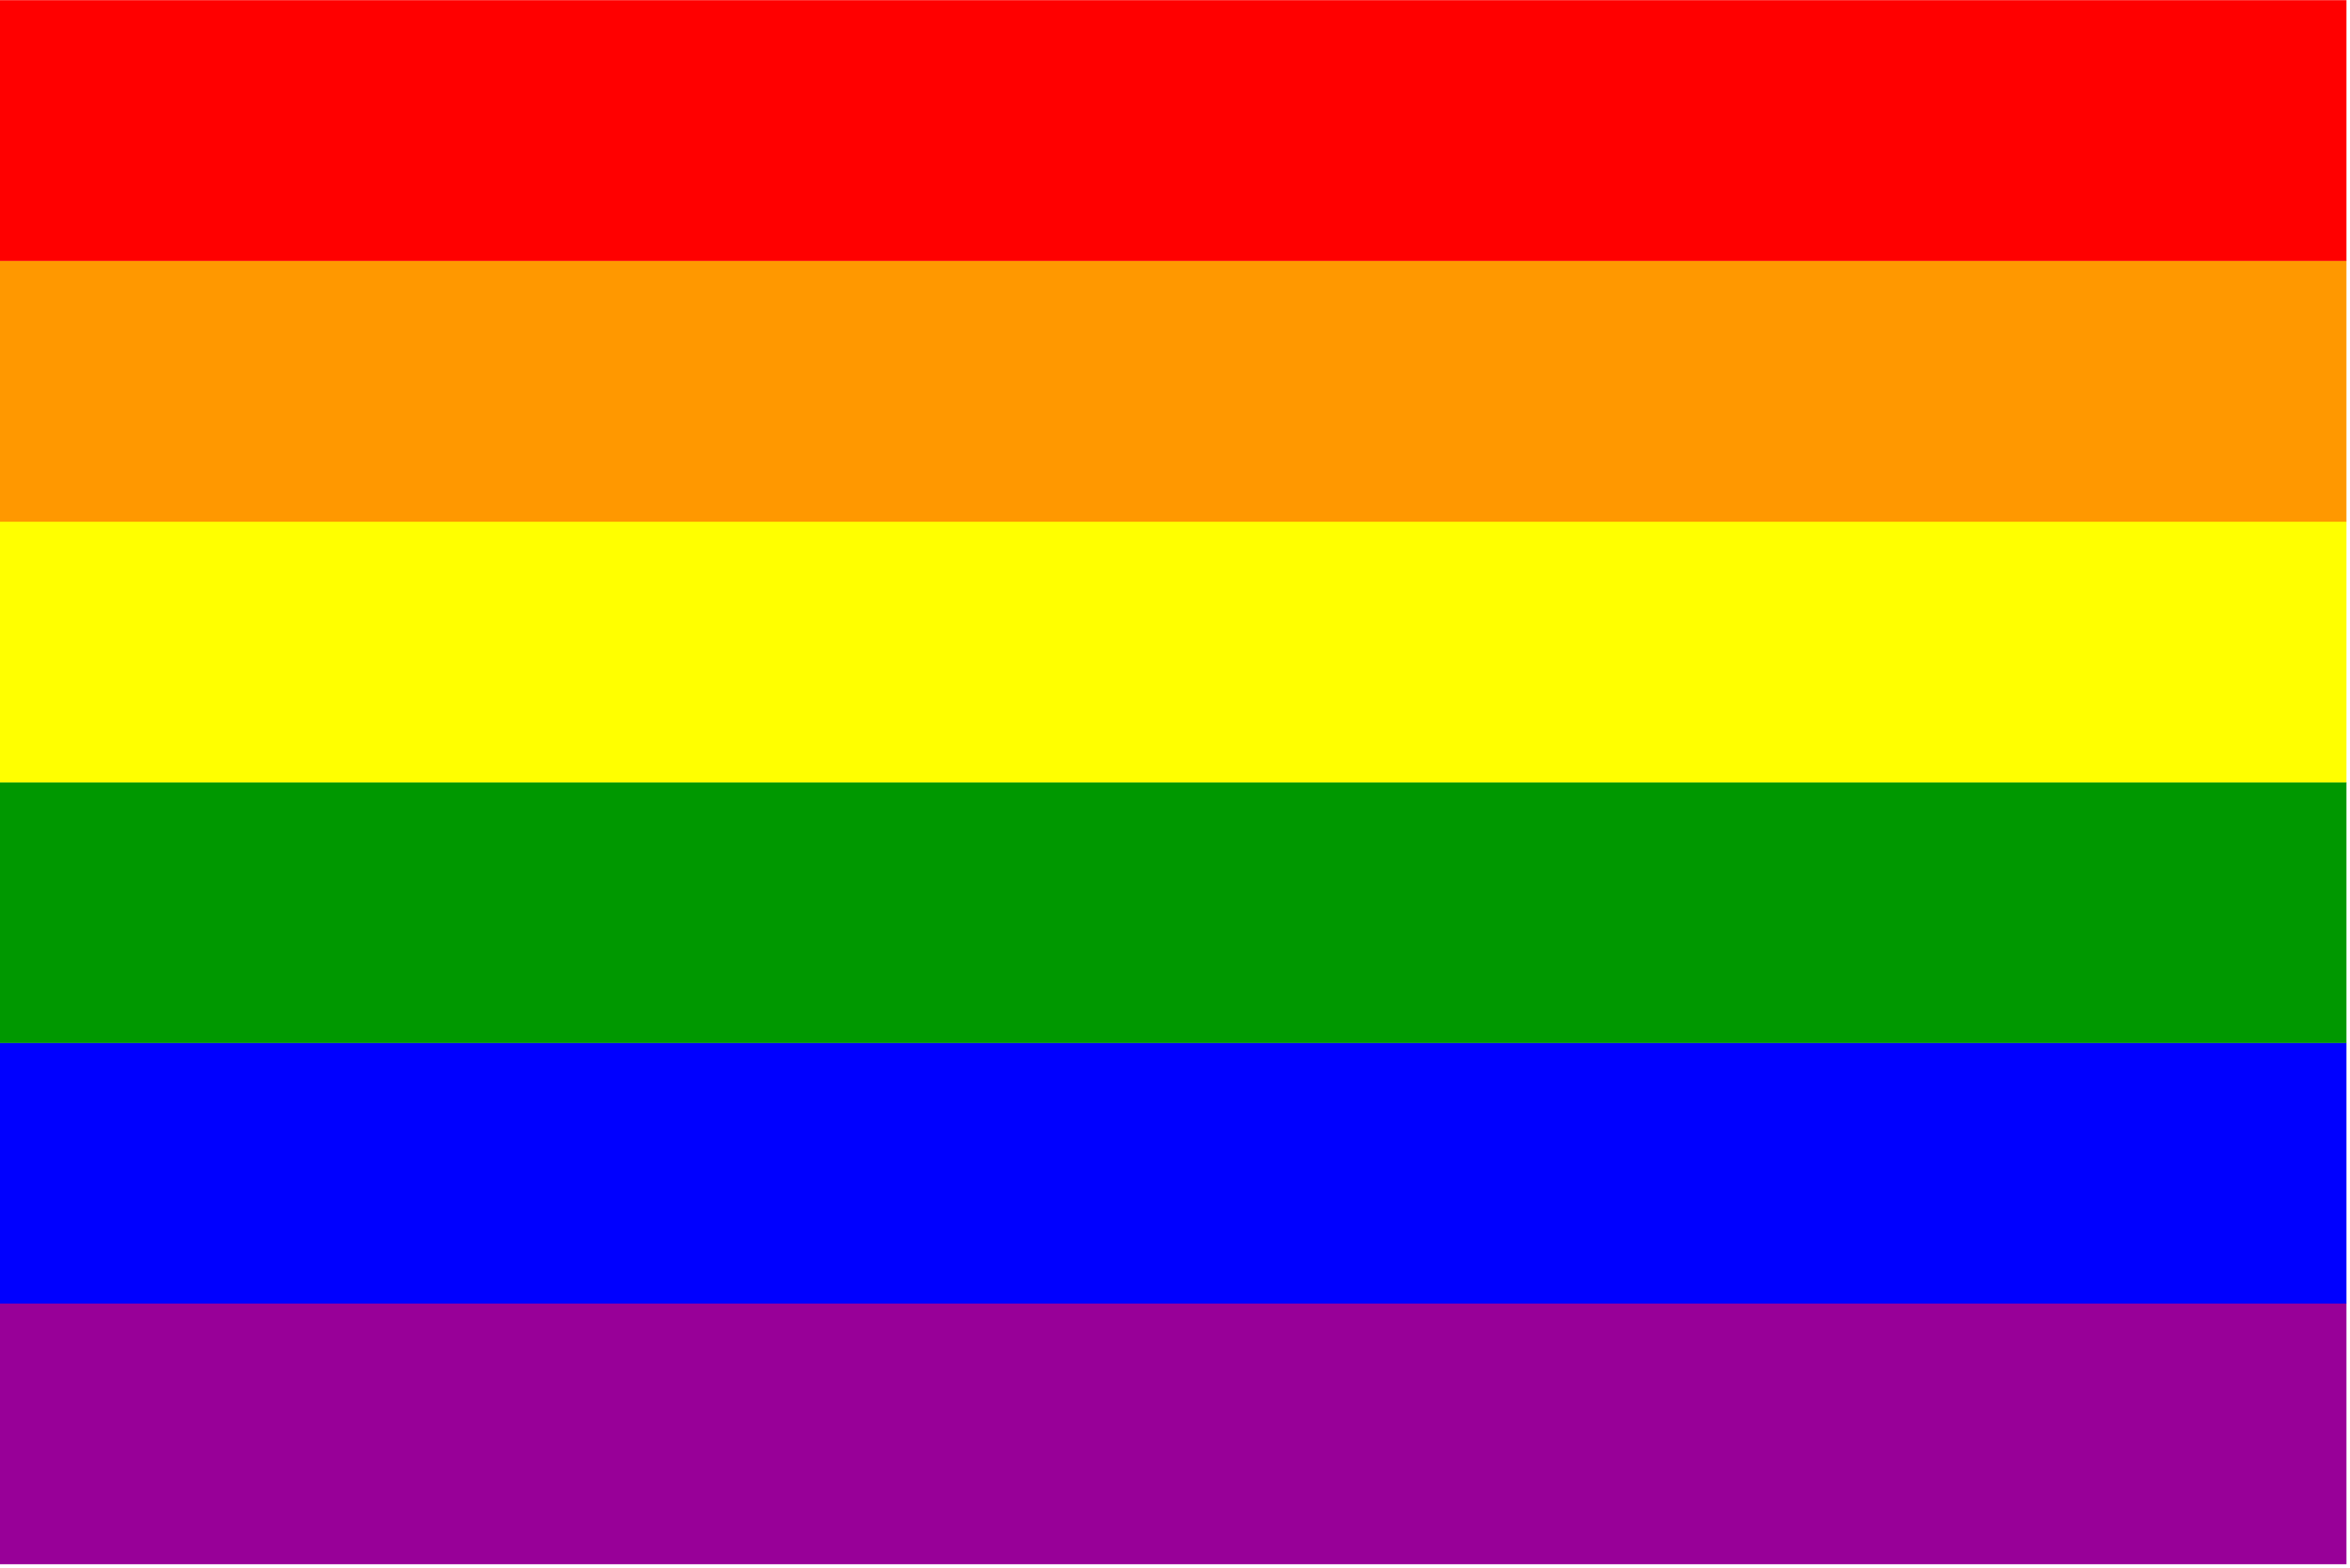 gay pride wallpaper 1080